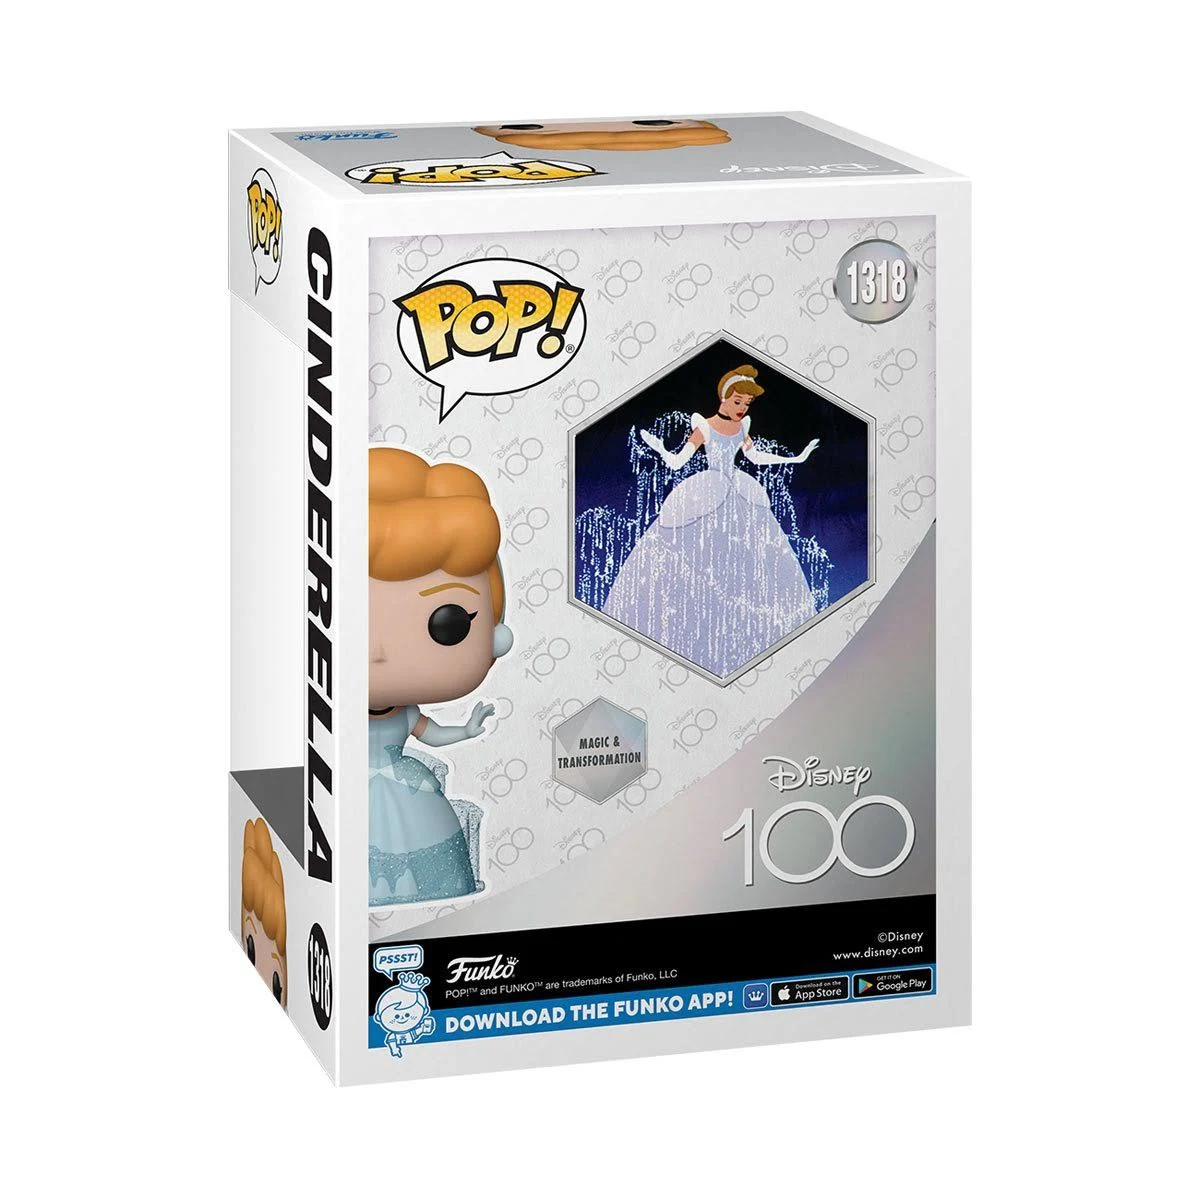 Cinderella - - 100 Disney POP